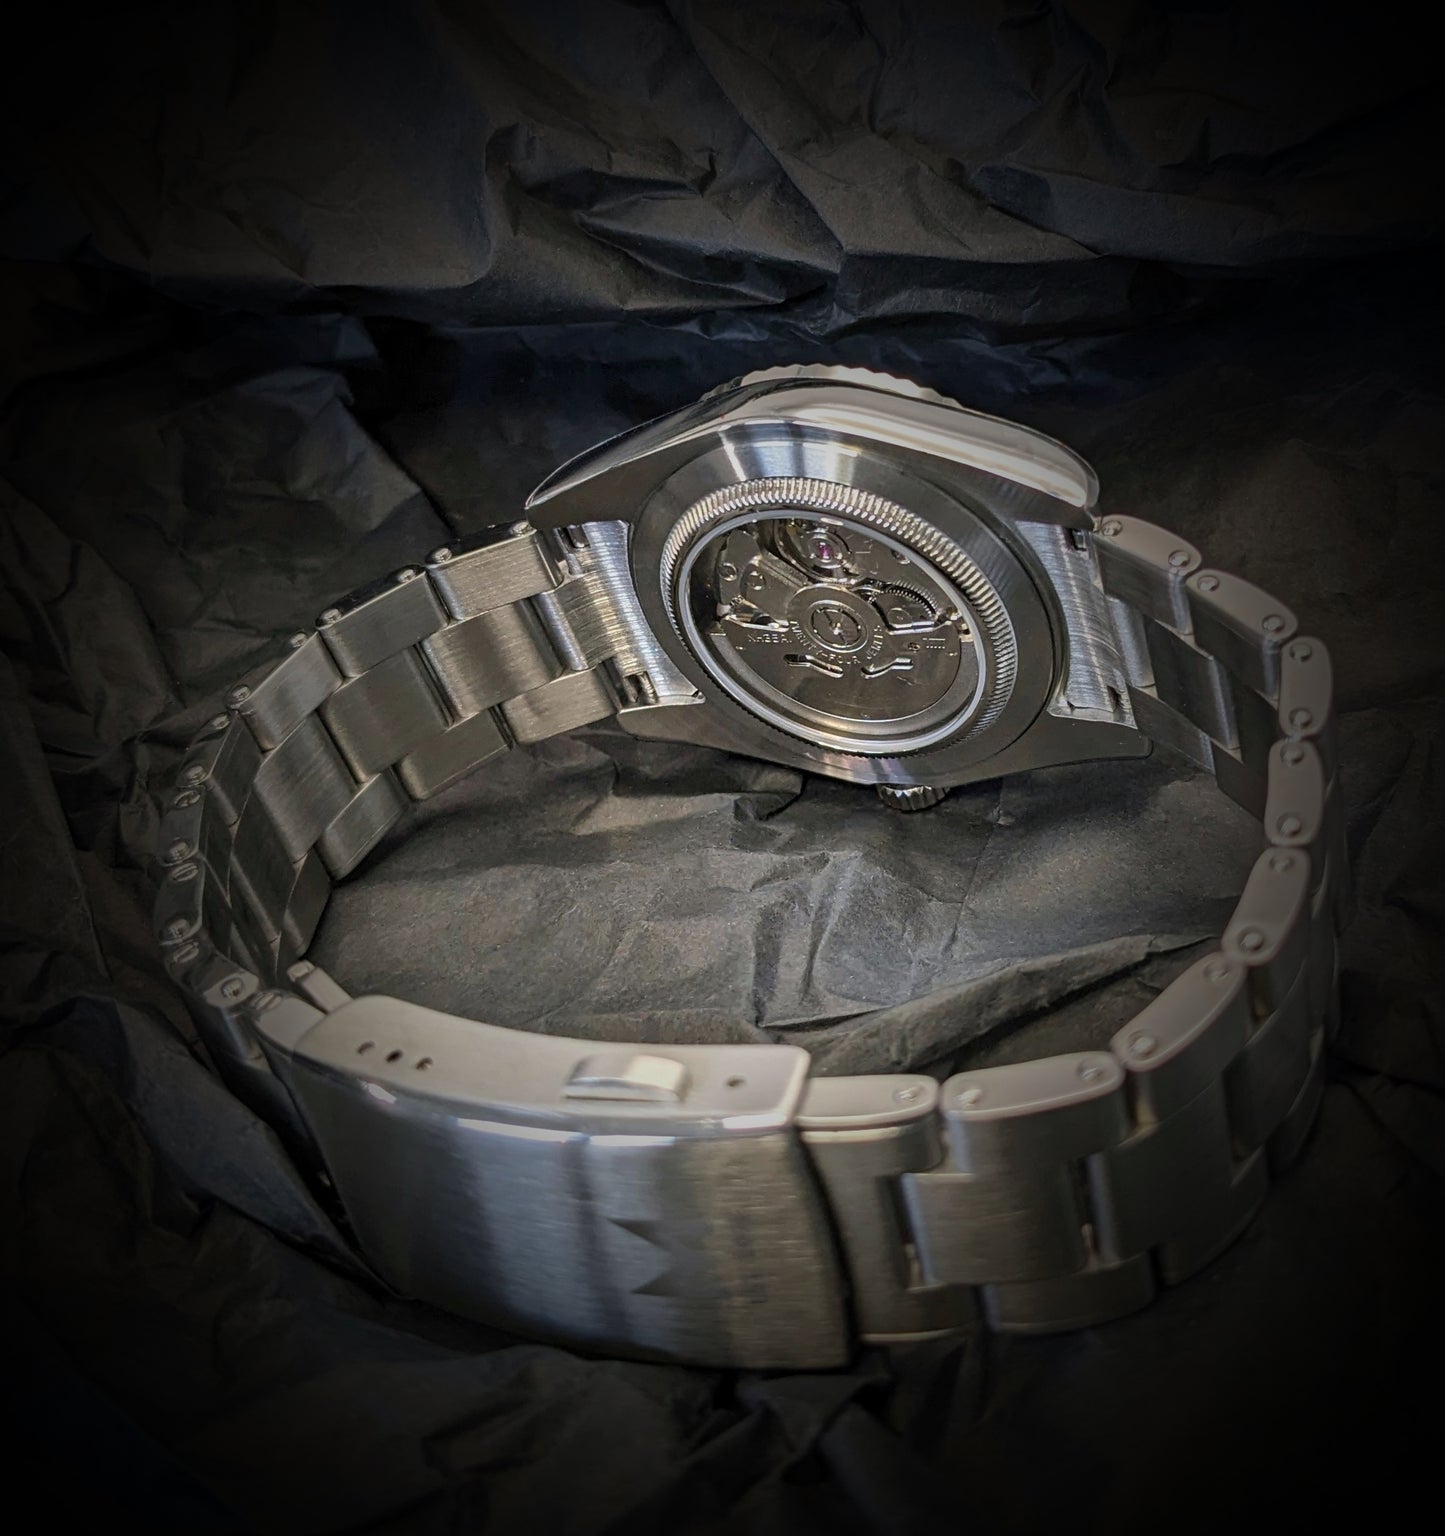  The Casino Vintage Timepiece - Monterey Watch Co